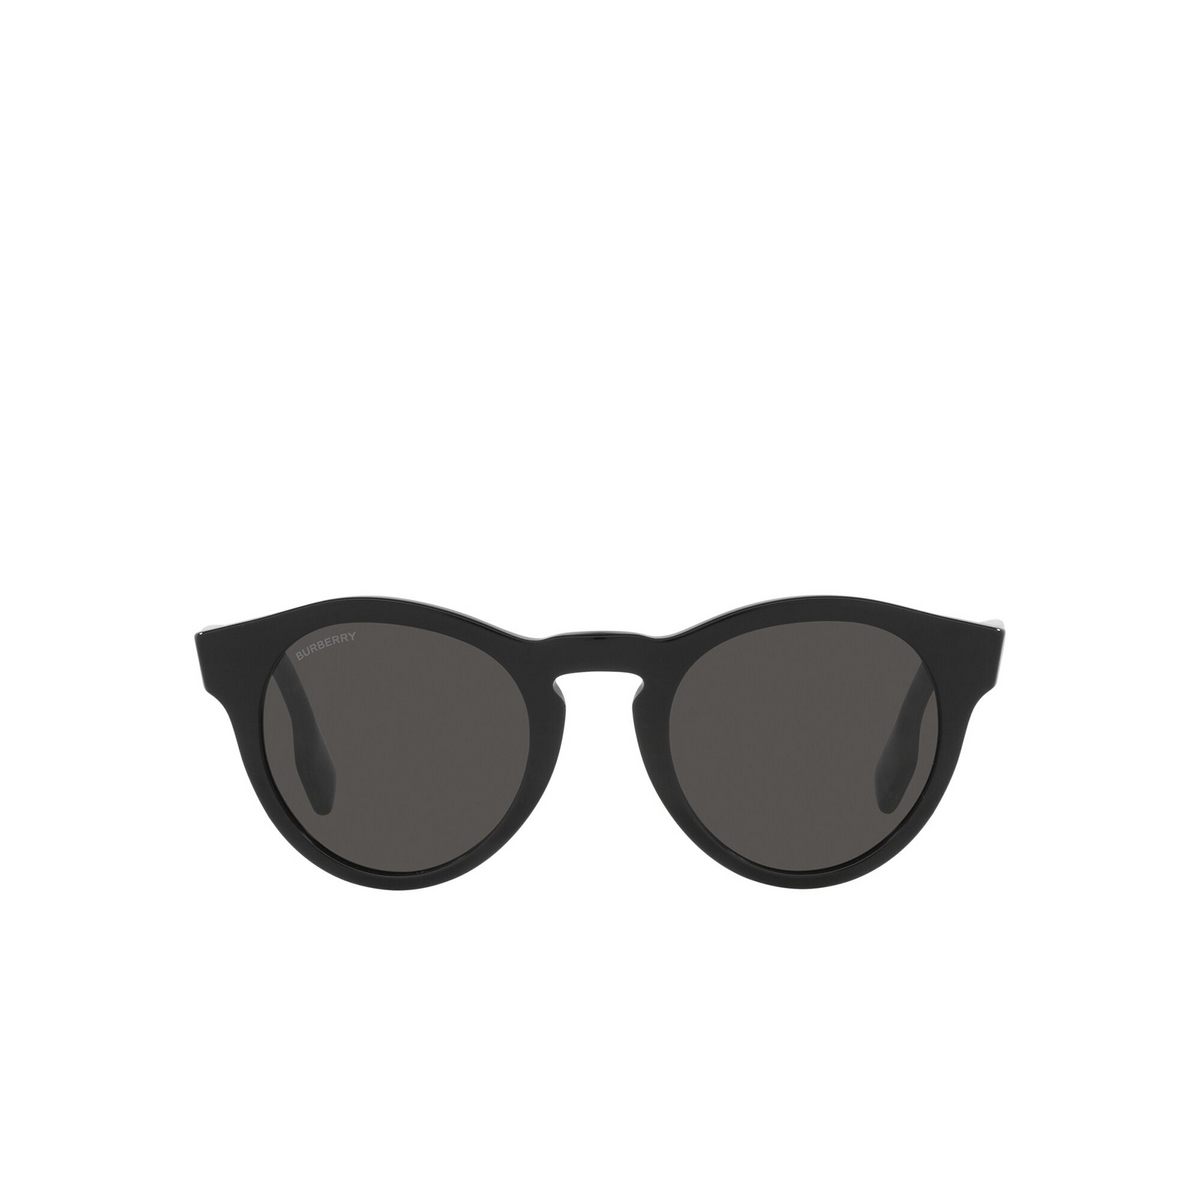 Burberry® Round Sunglasses: BE4359 Reid color 399687 Black - front view